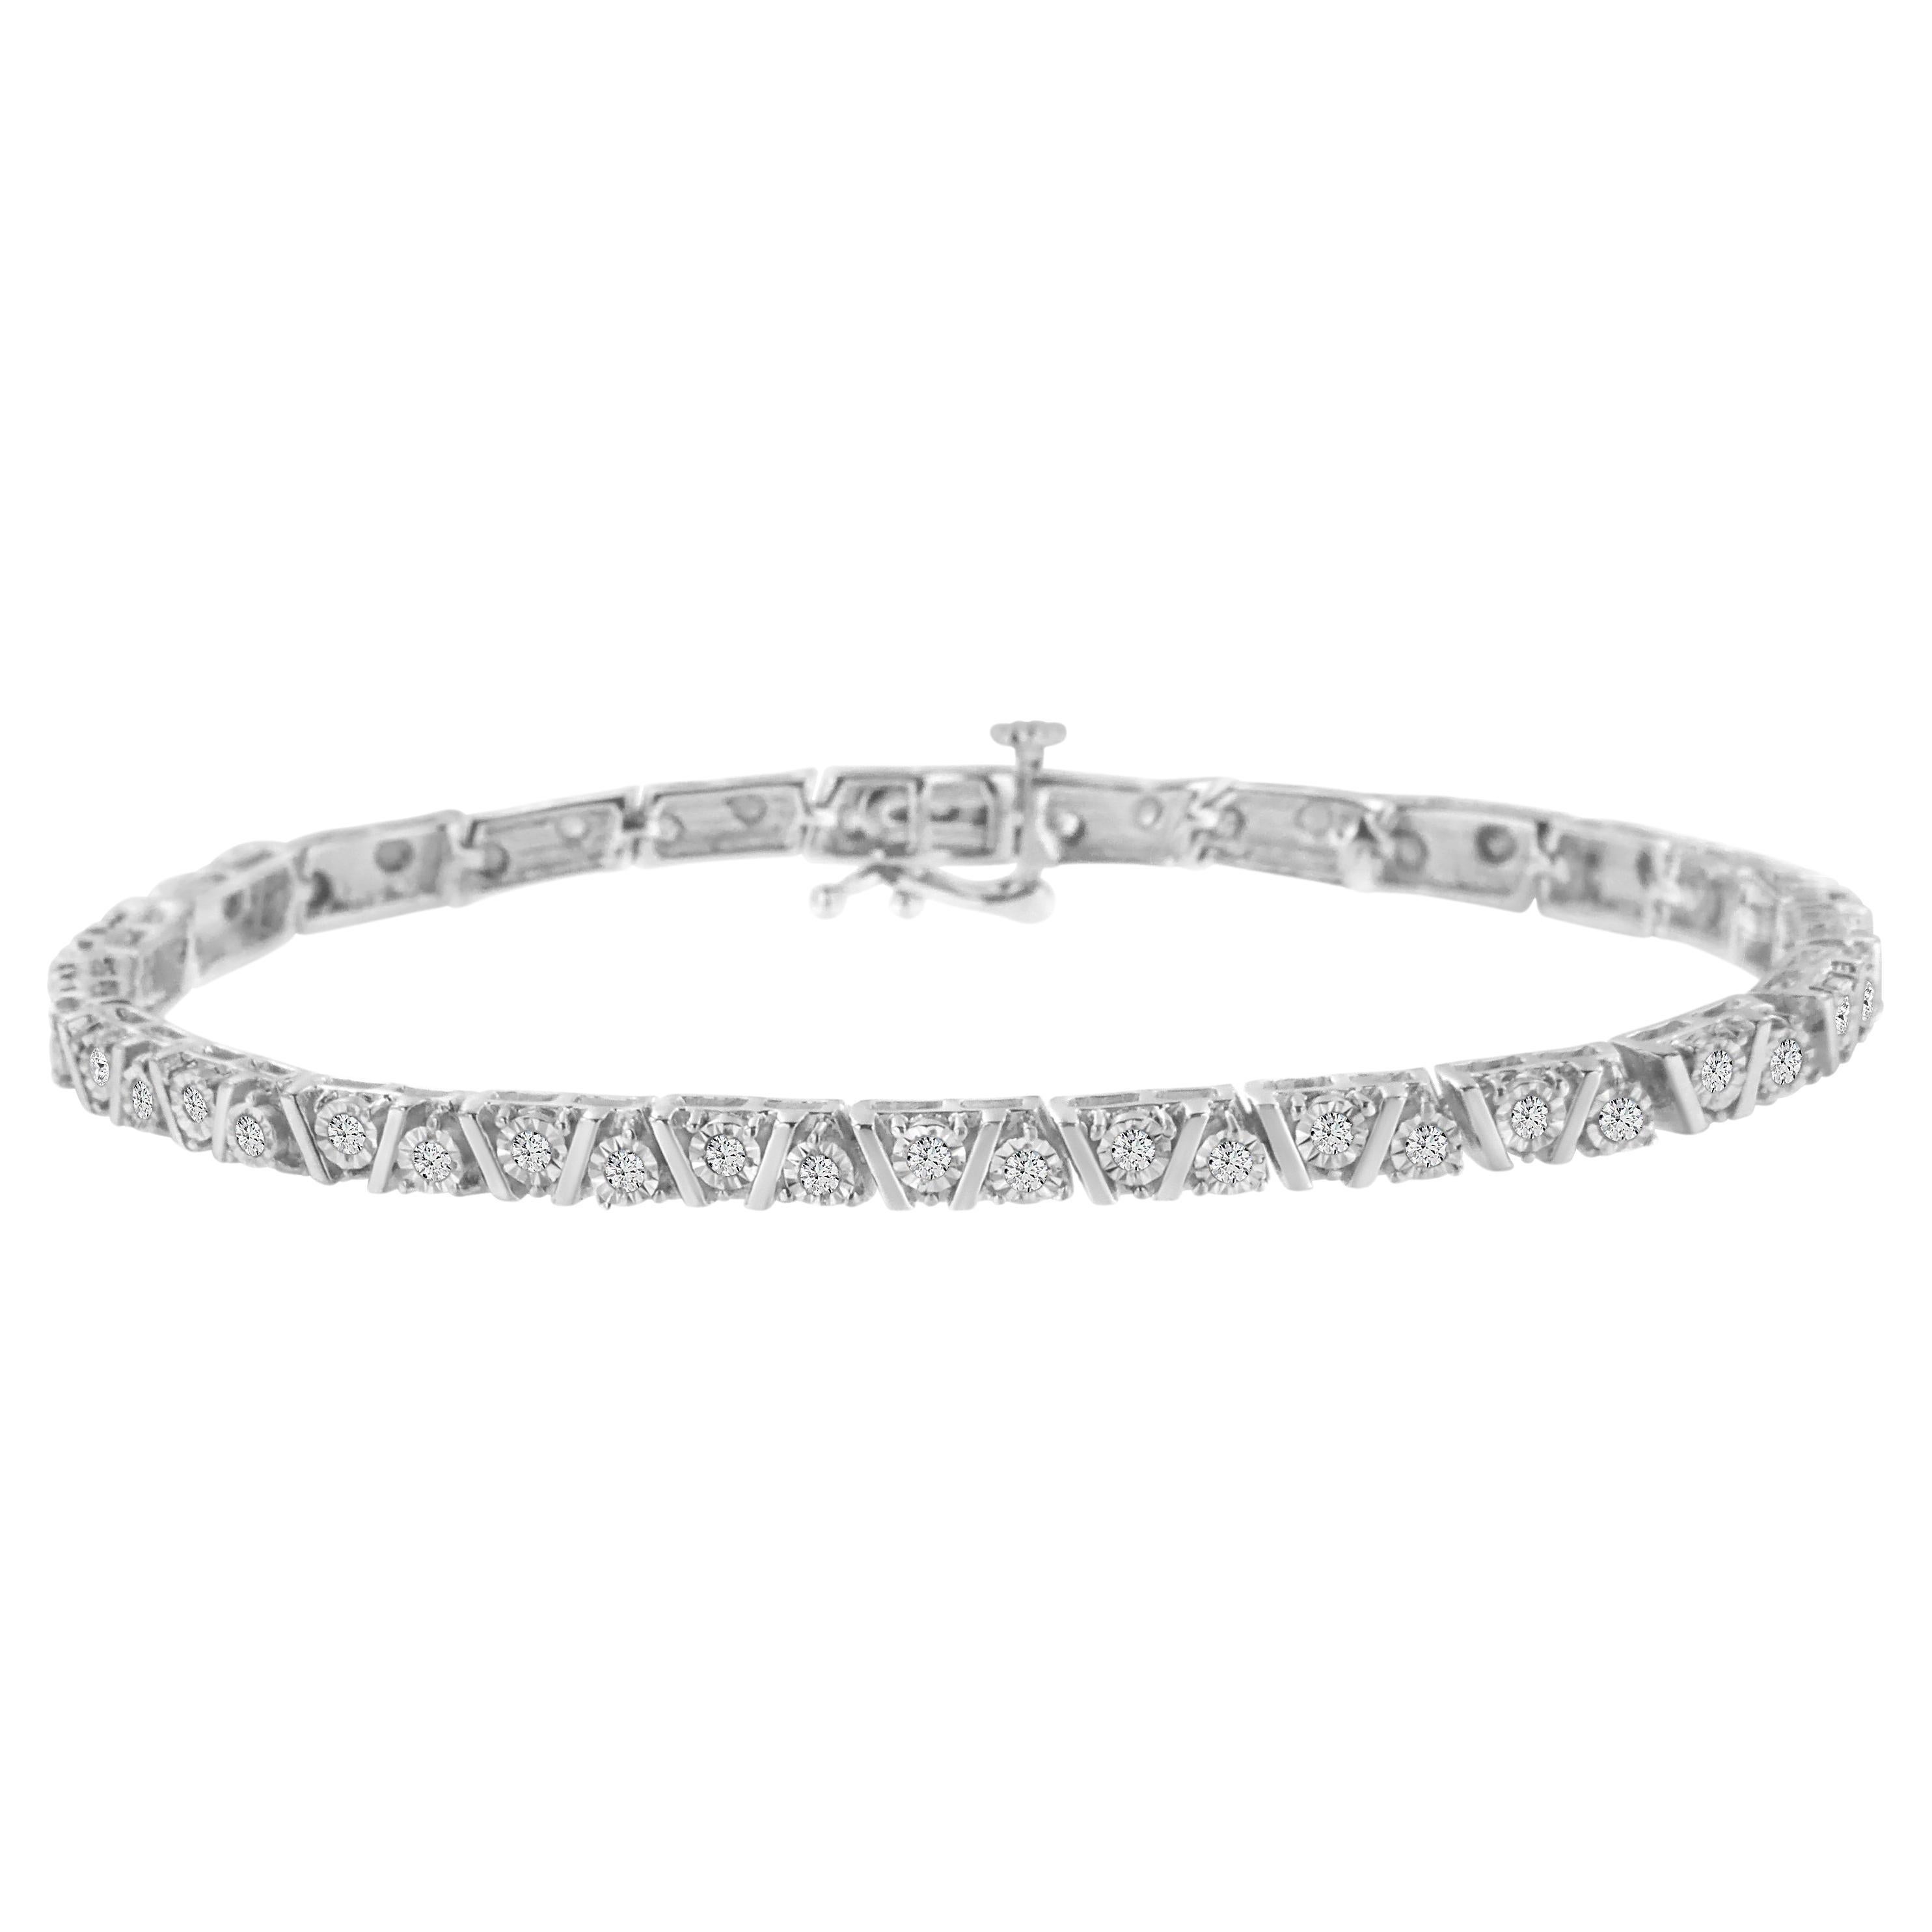 .925 Sterling Silver 1.0 Carat Miracle-Set Diamond Tennis Bracelet